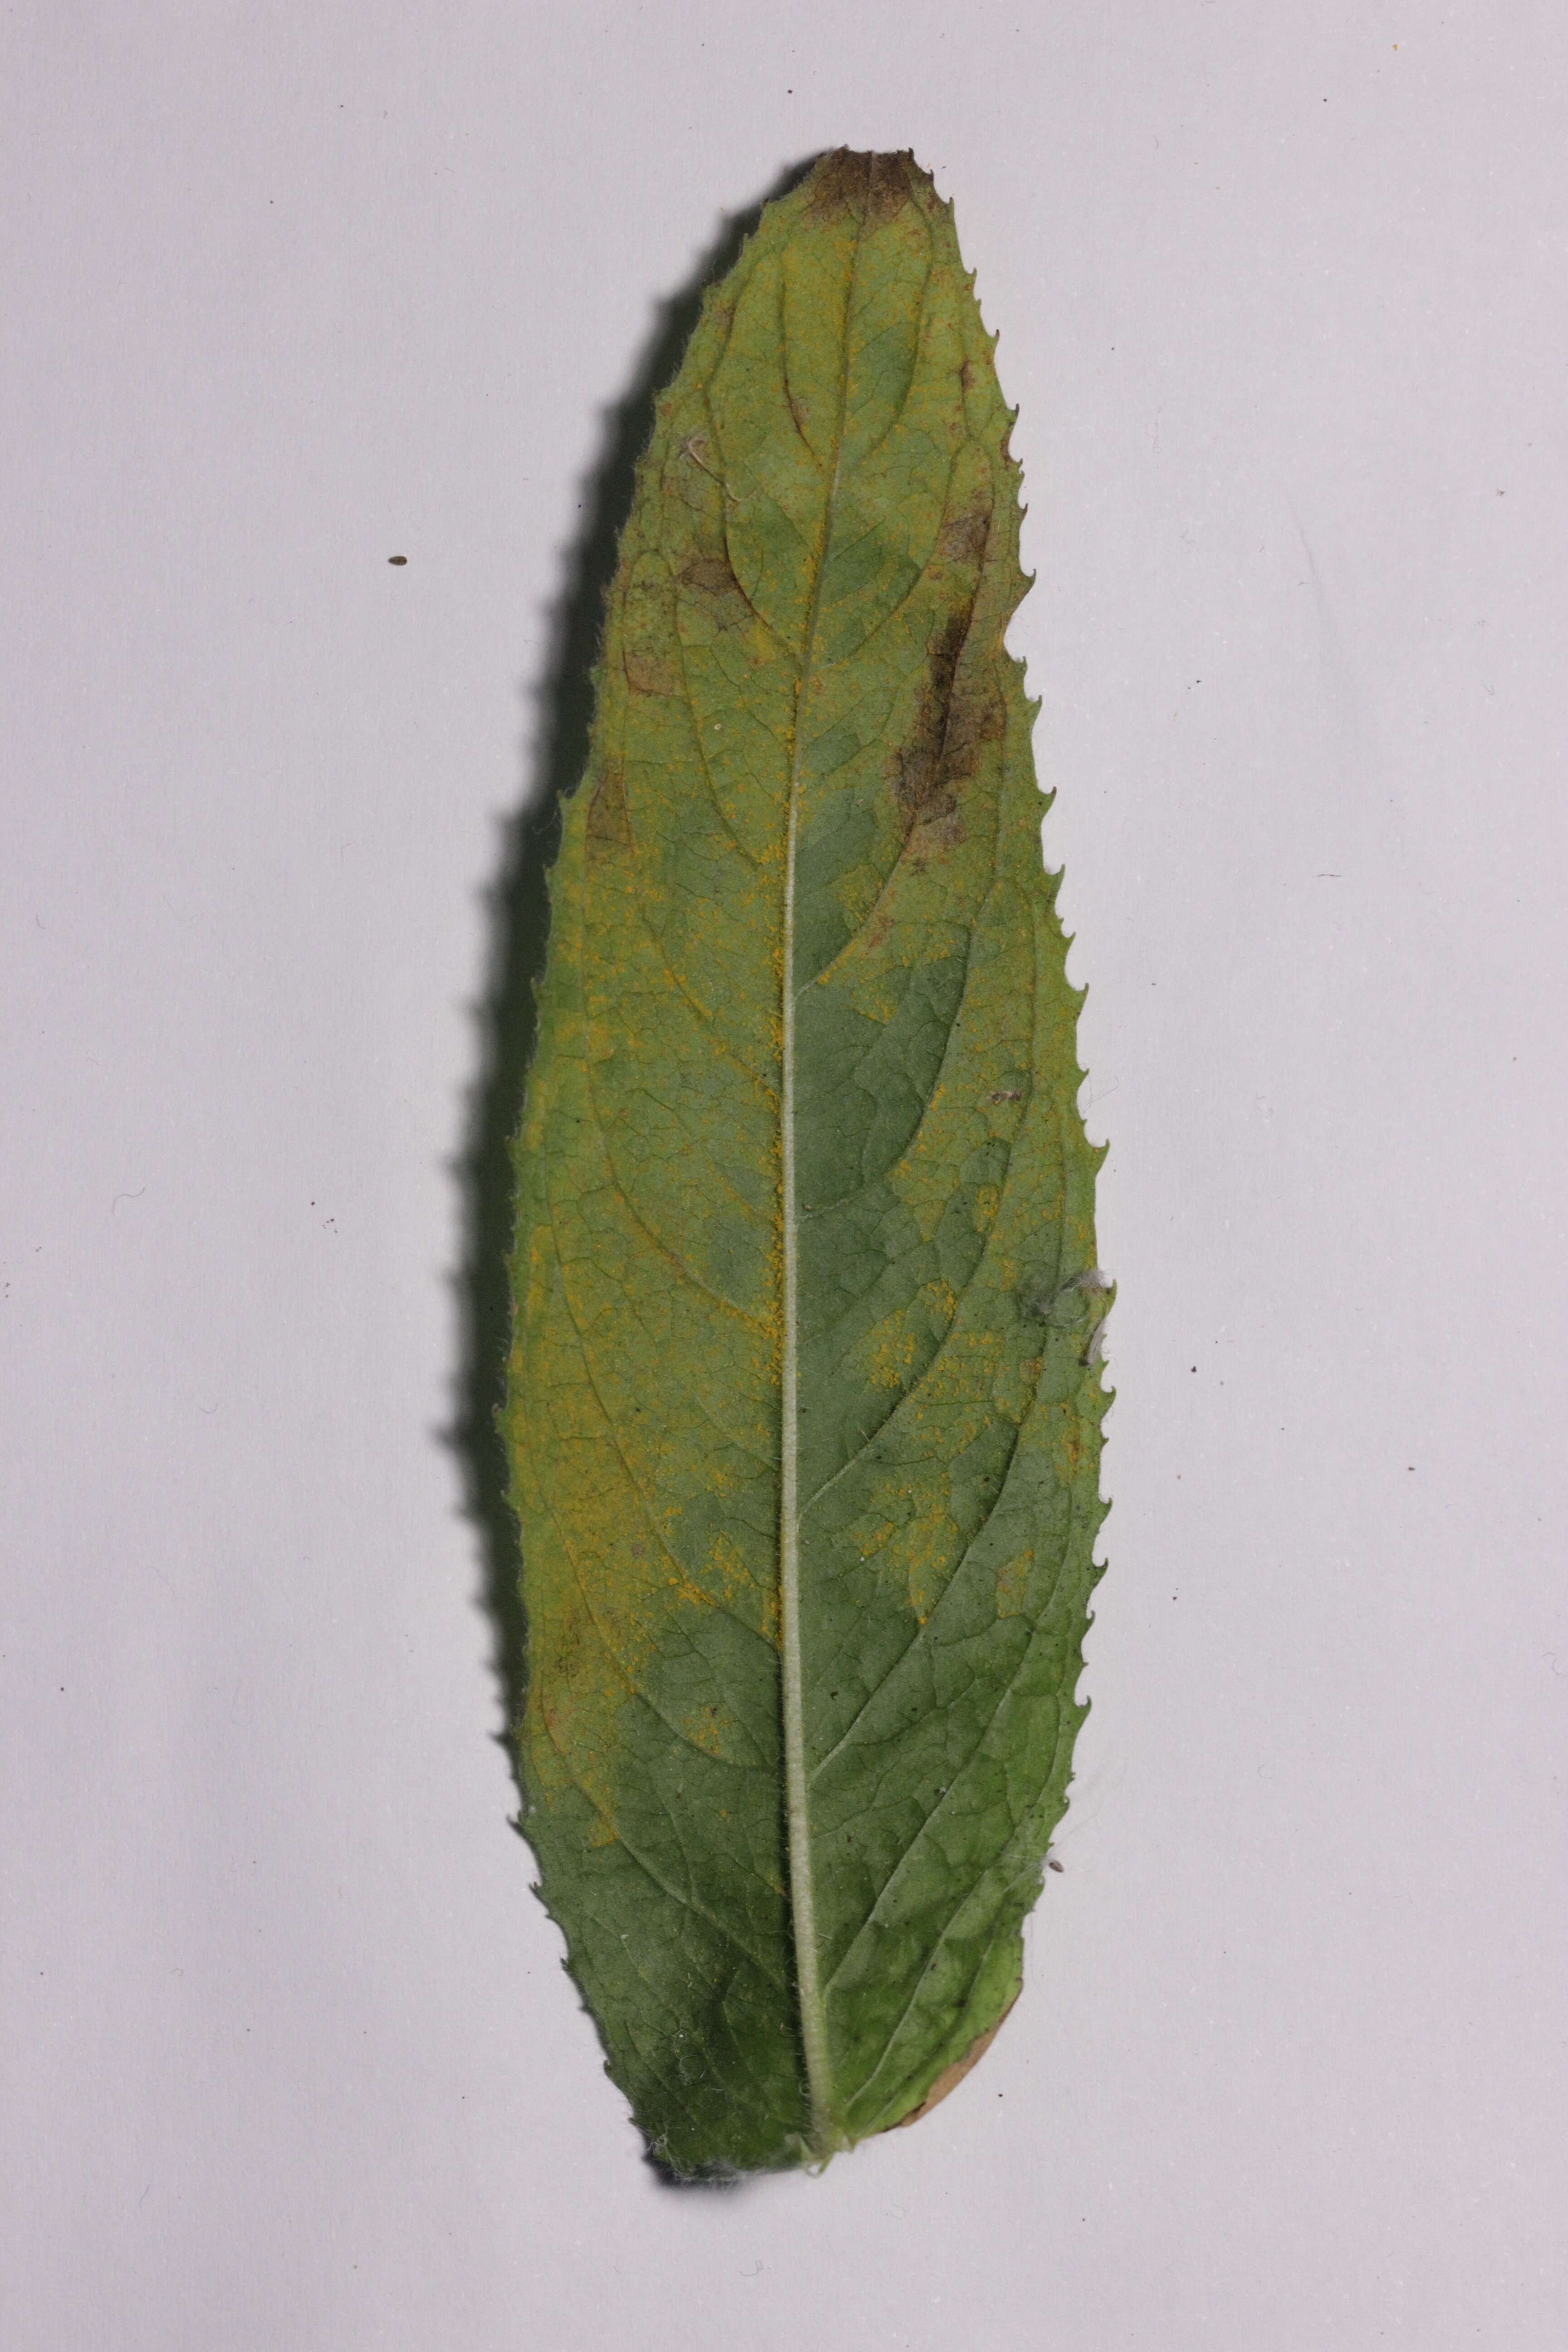 Image of Rust of Fuchsia